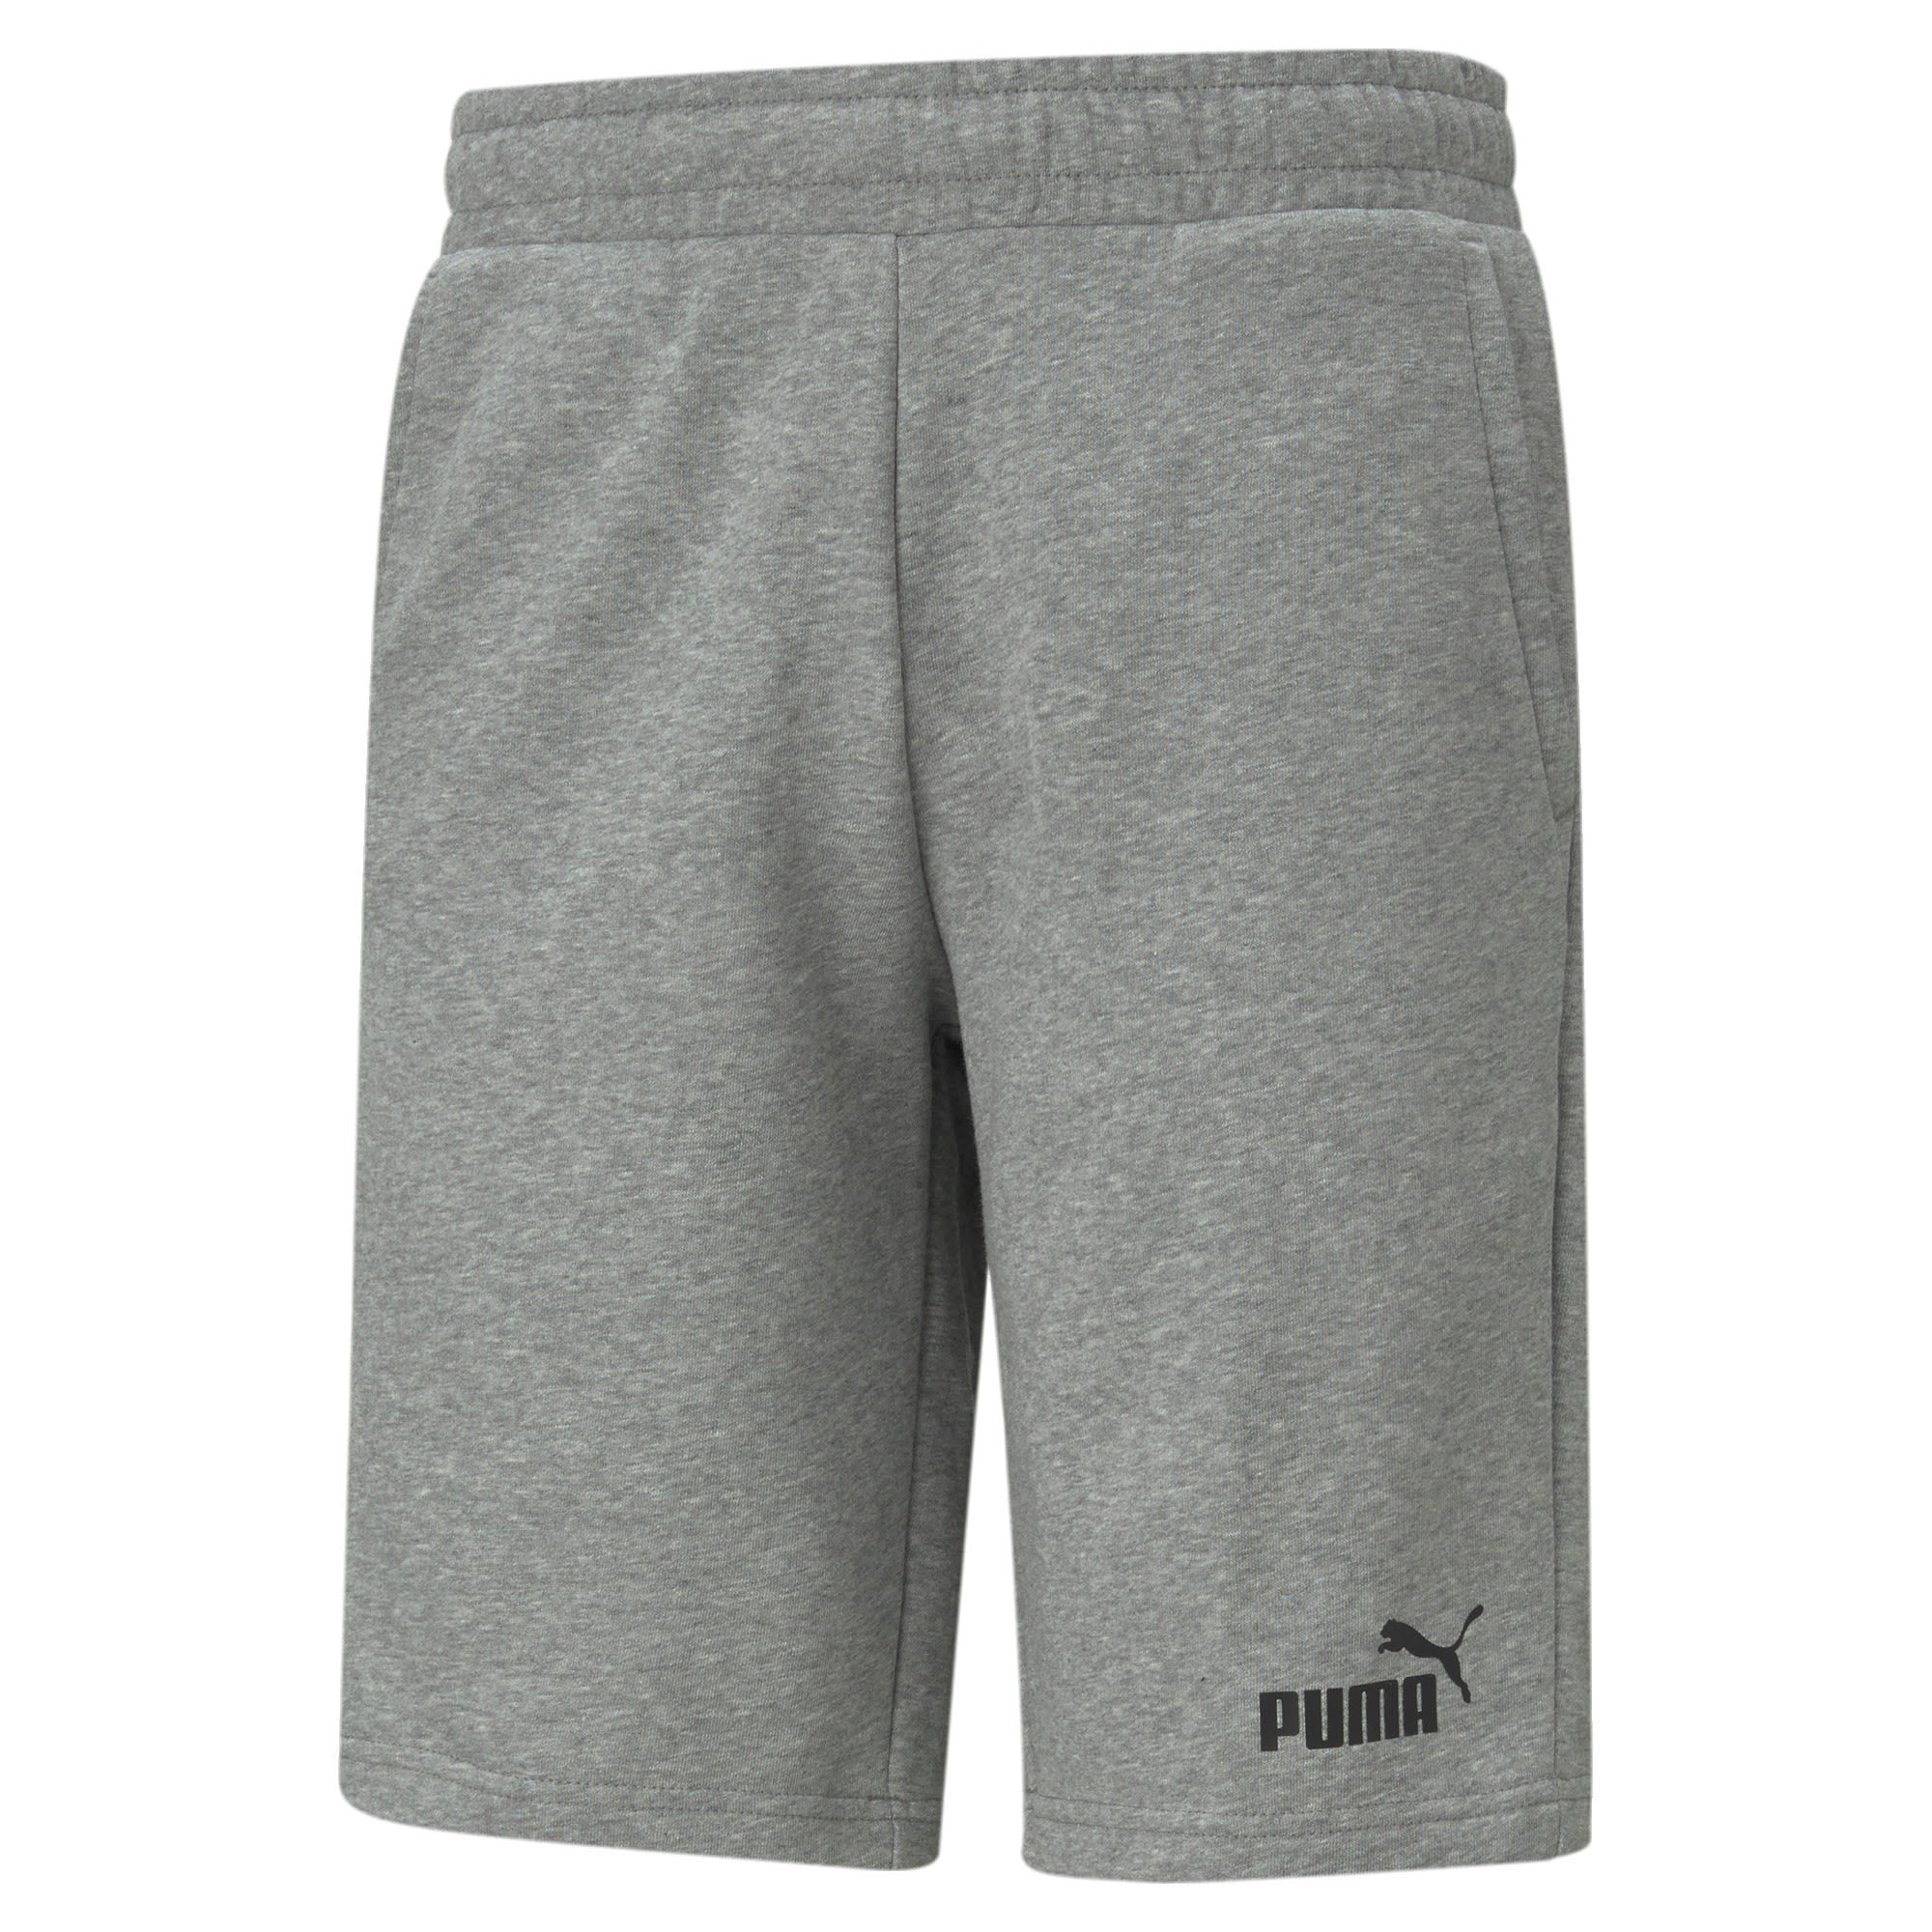 Puma Essentials Shorts Grau- Male Shorts- Grsse S - Farbe Medium Gray Heather unter Puma